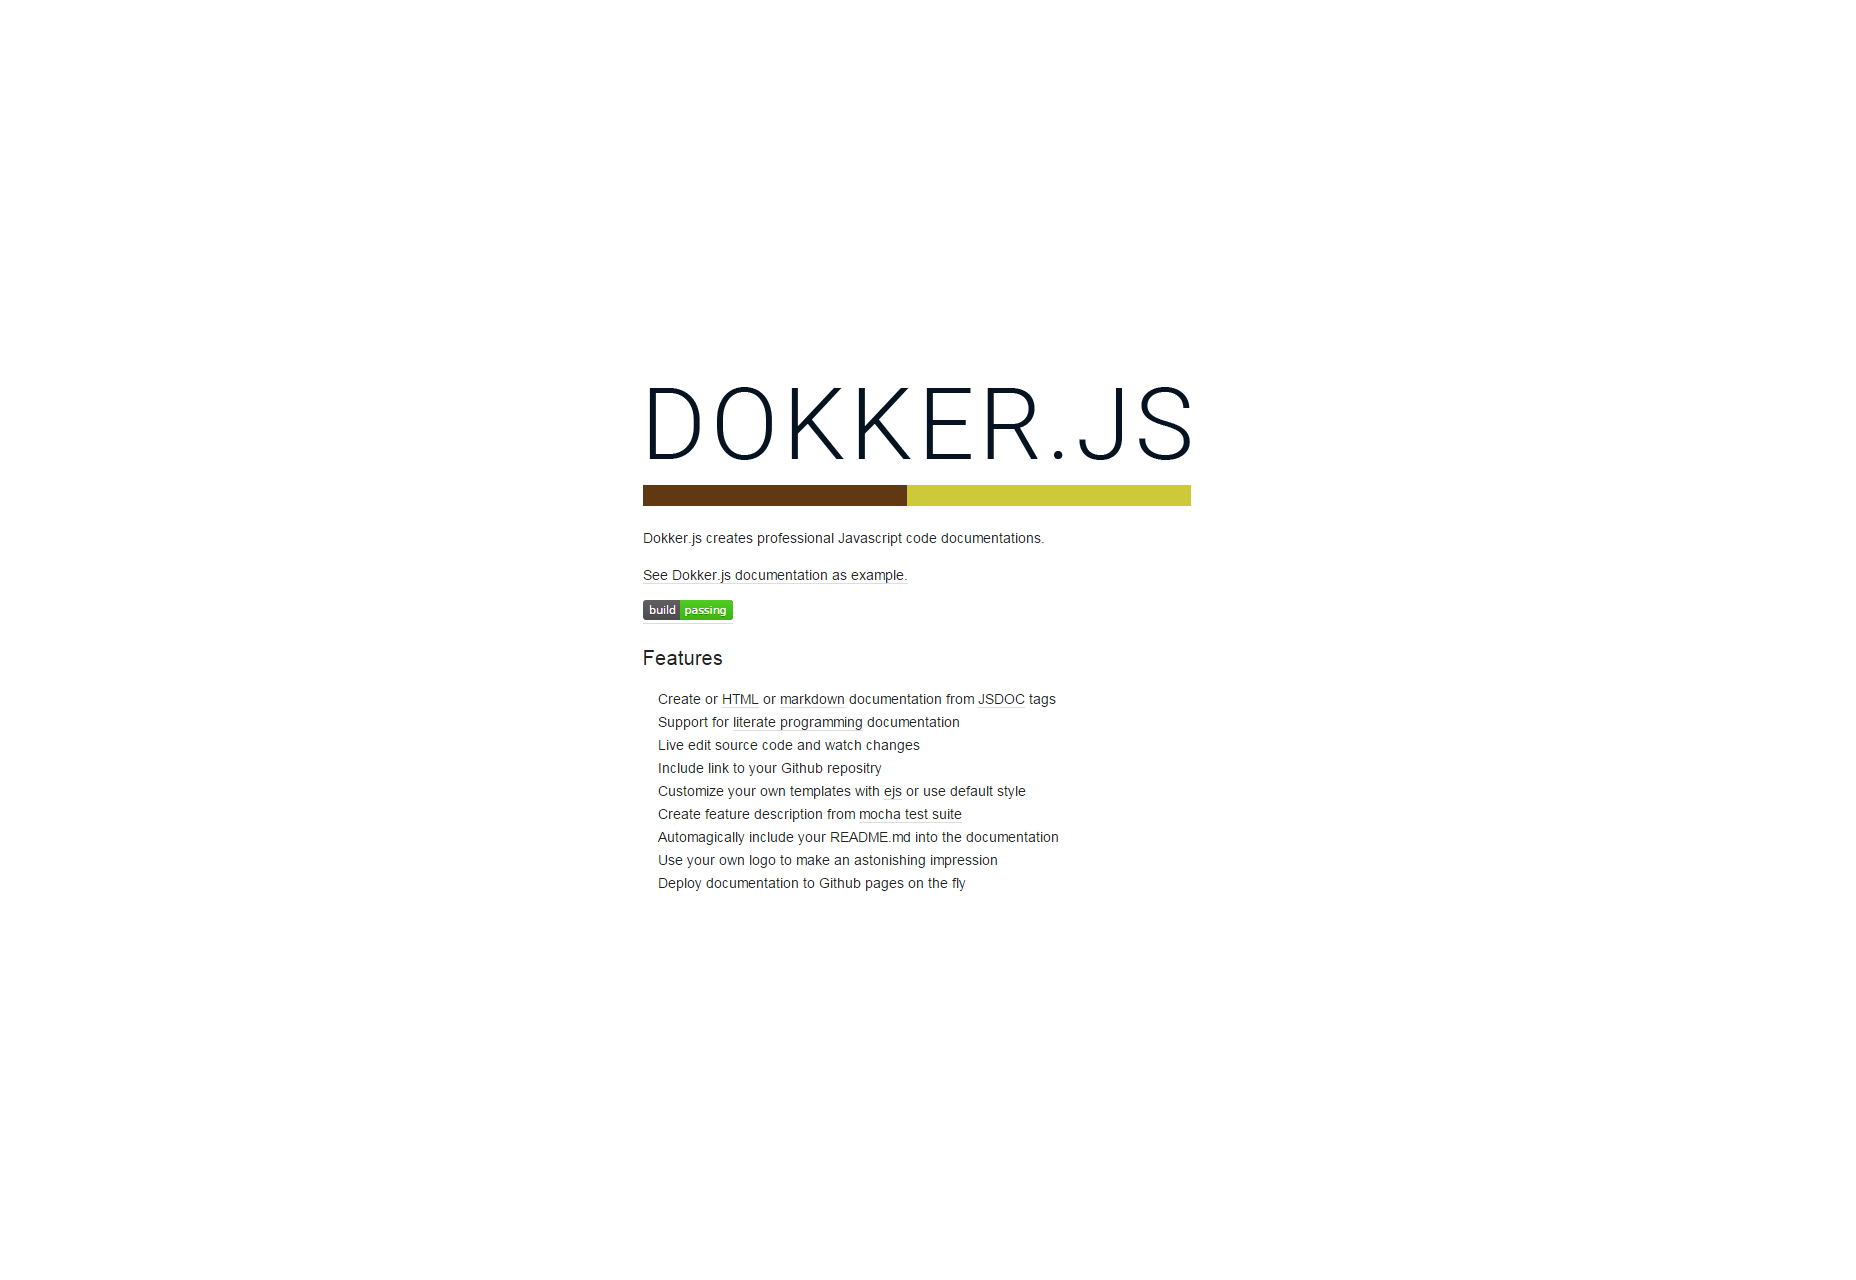 Dokker.js: Professional Javascript Code Documentation Creator